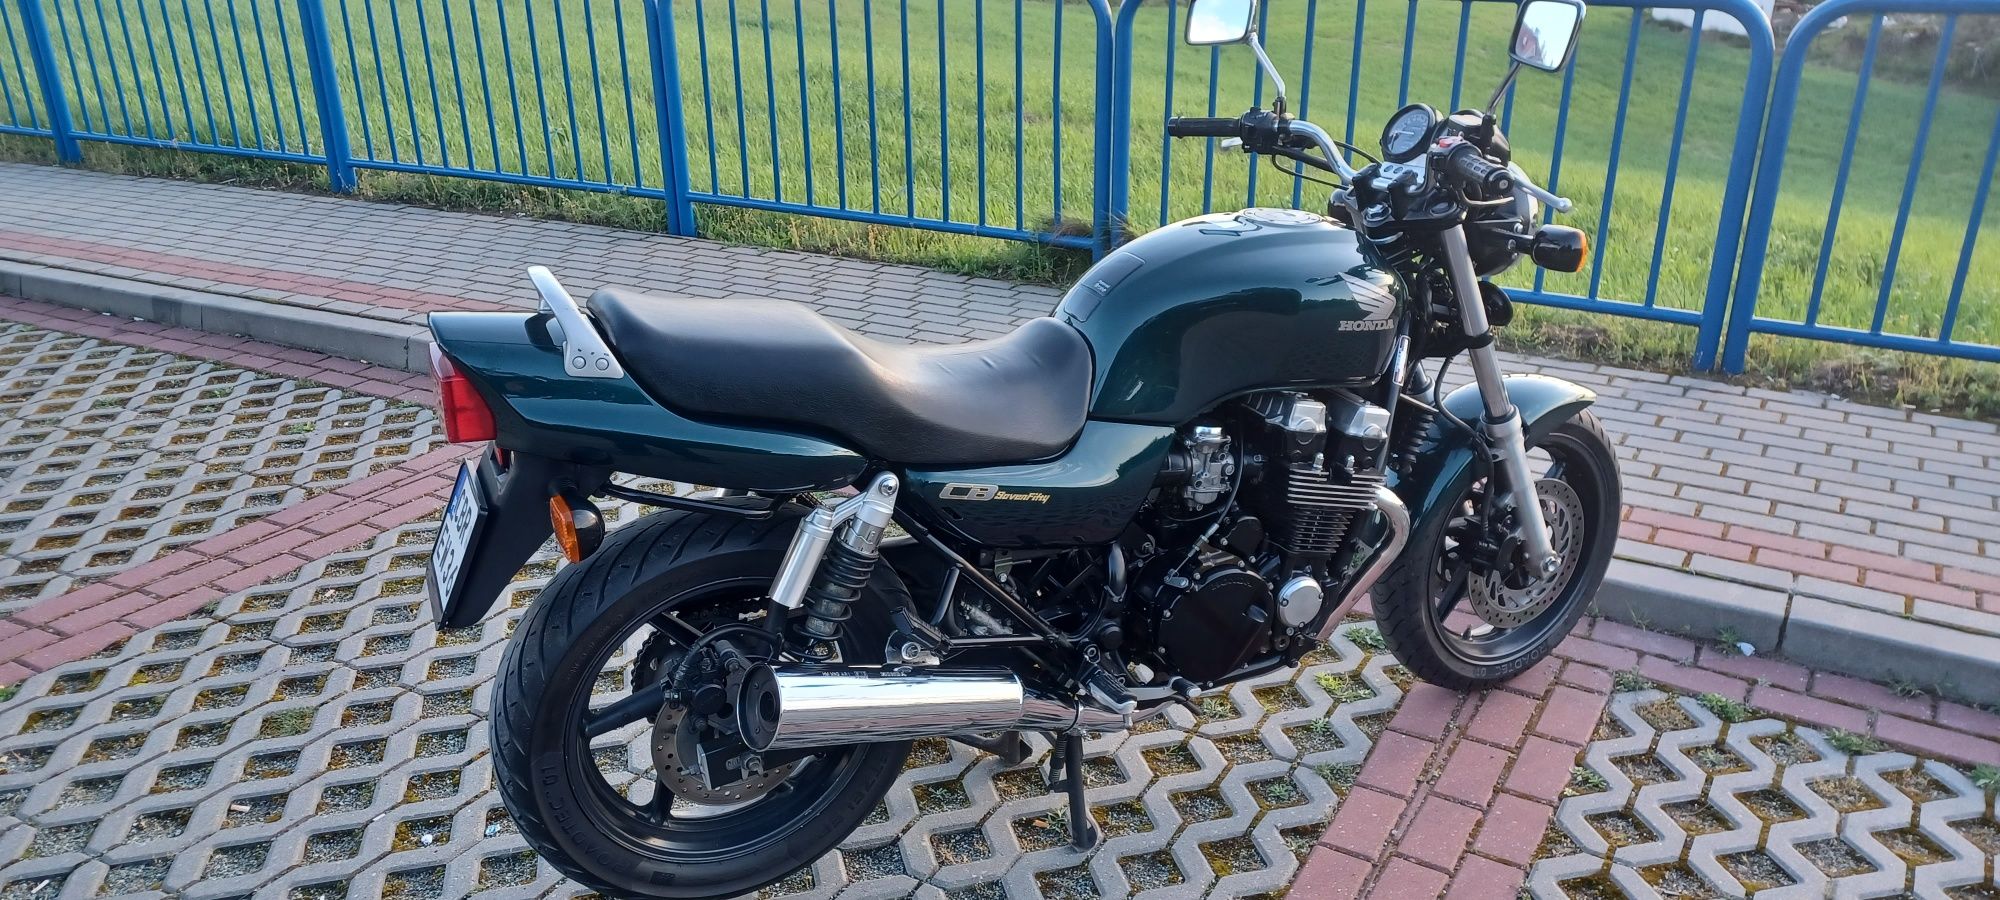 Honda CB 750 Seven fifty